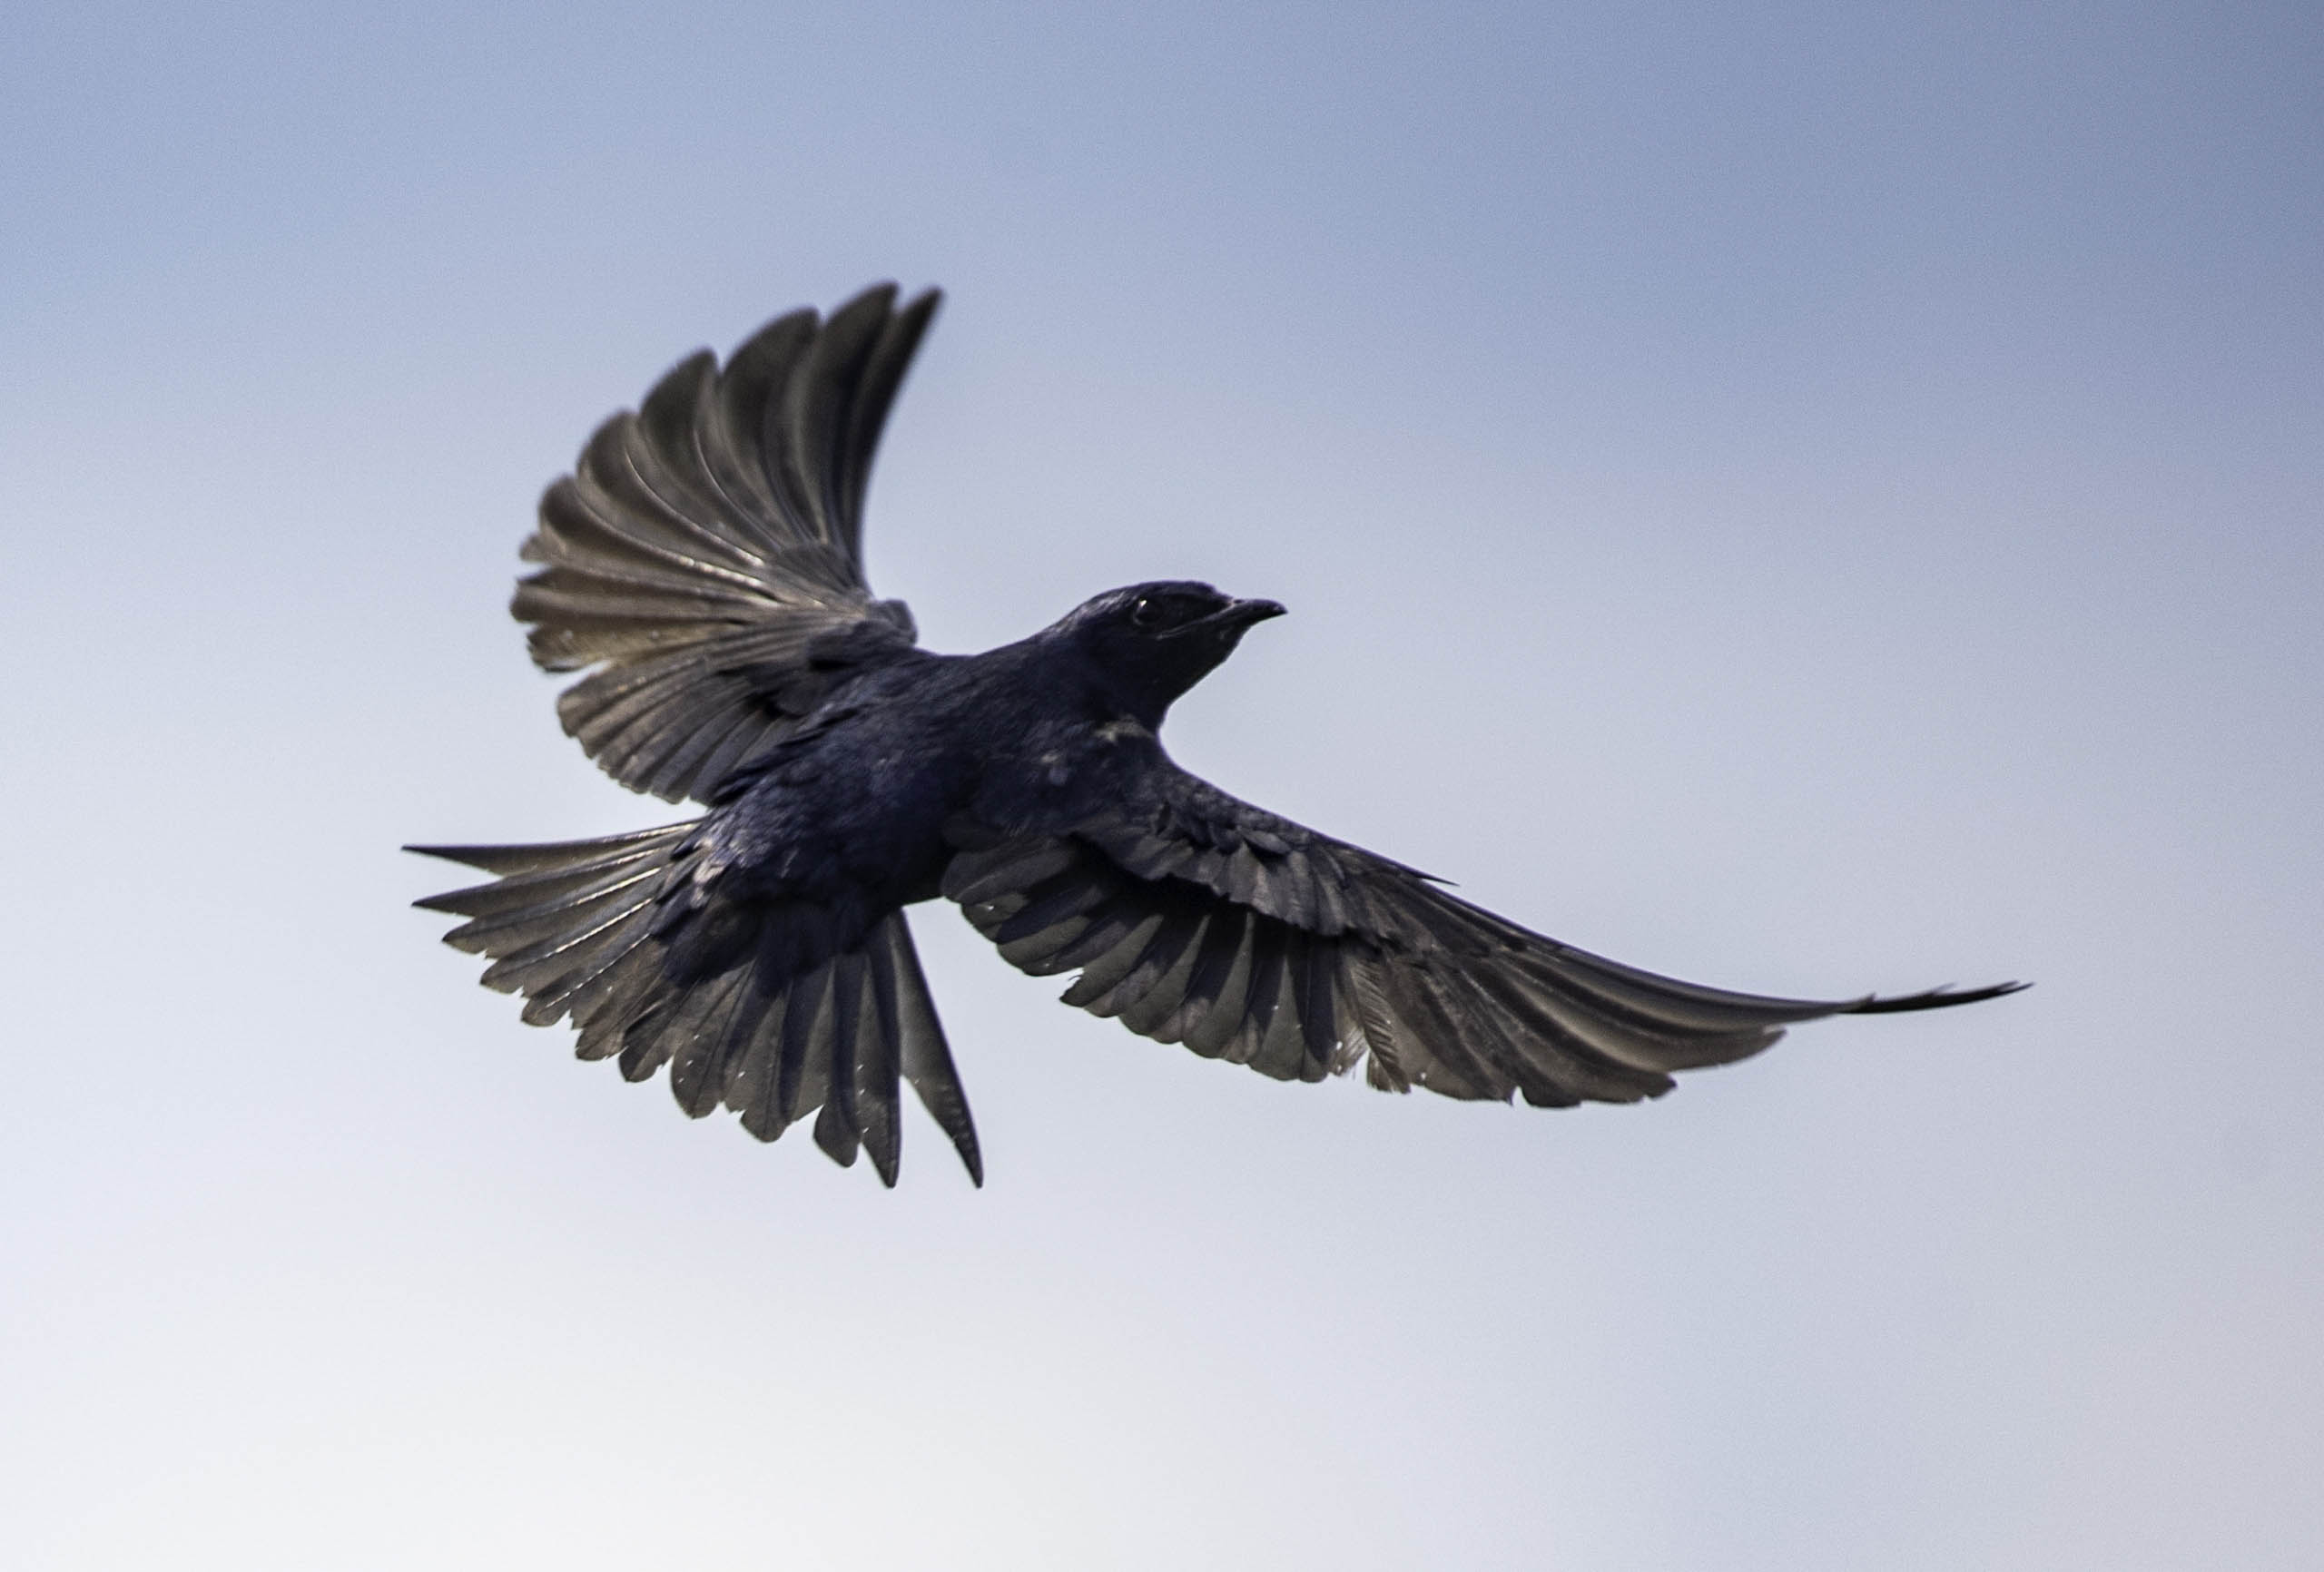 Purple martin, a dark-colored songbird, spreading its wings in flight.